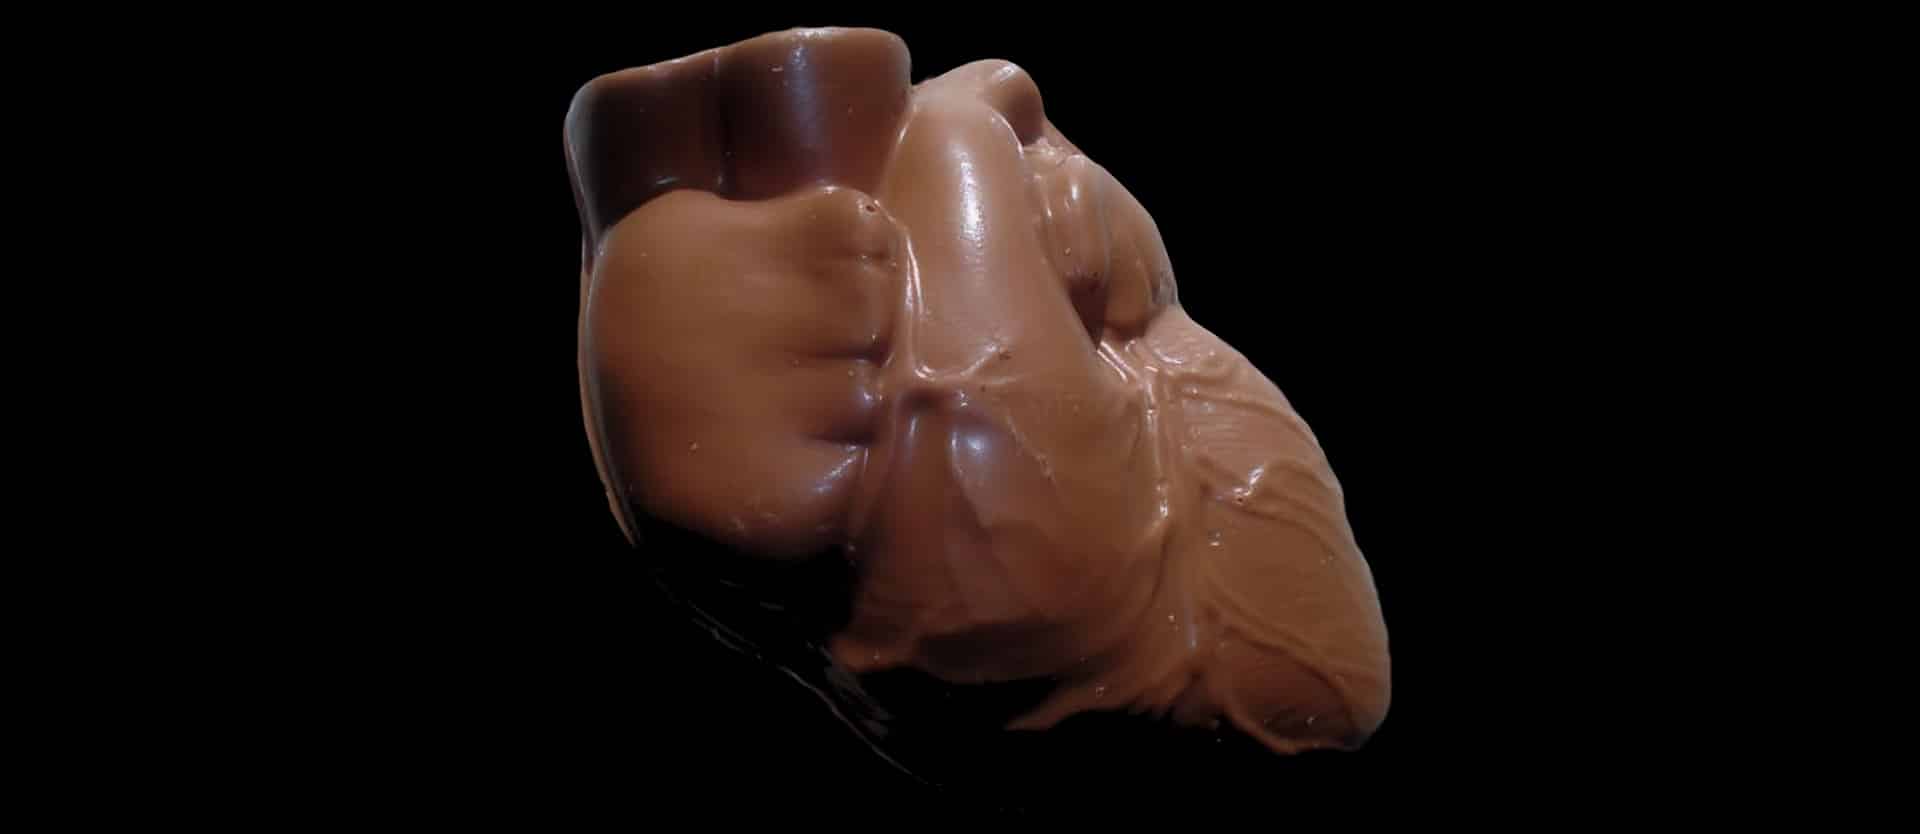 Dark Chocolate and Artery Function